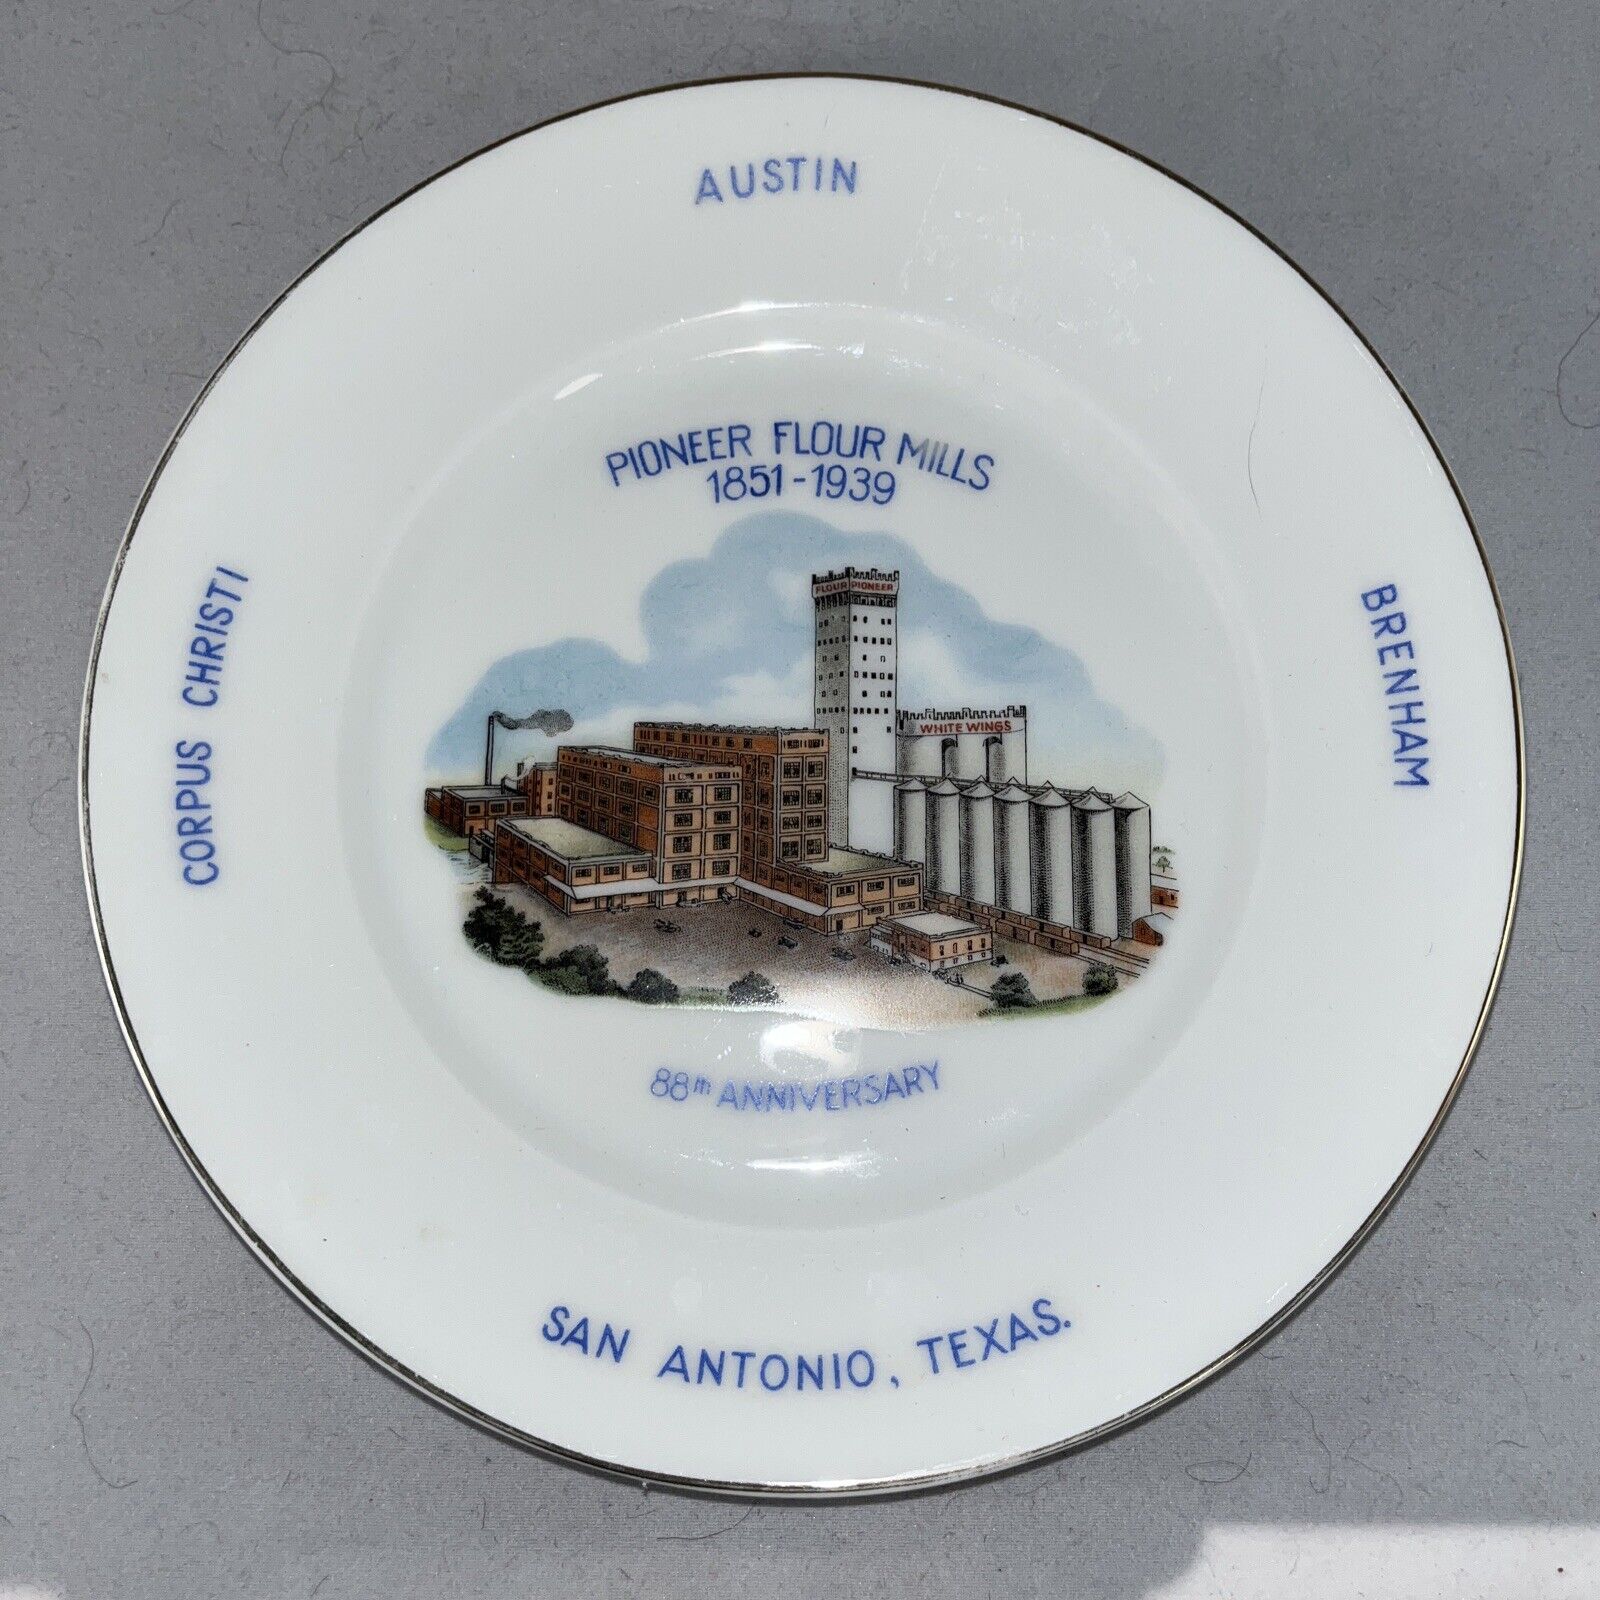 Vintage KPM Porcelain Germany Pioneer Flour Mills 88th Anniversary Plate Texas